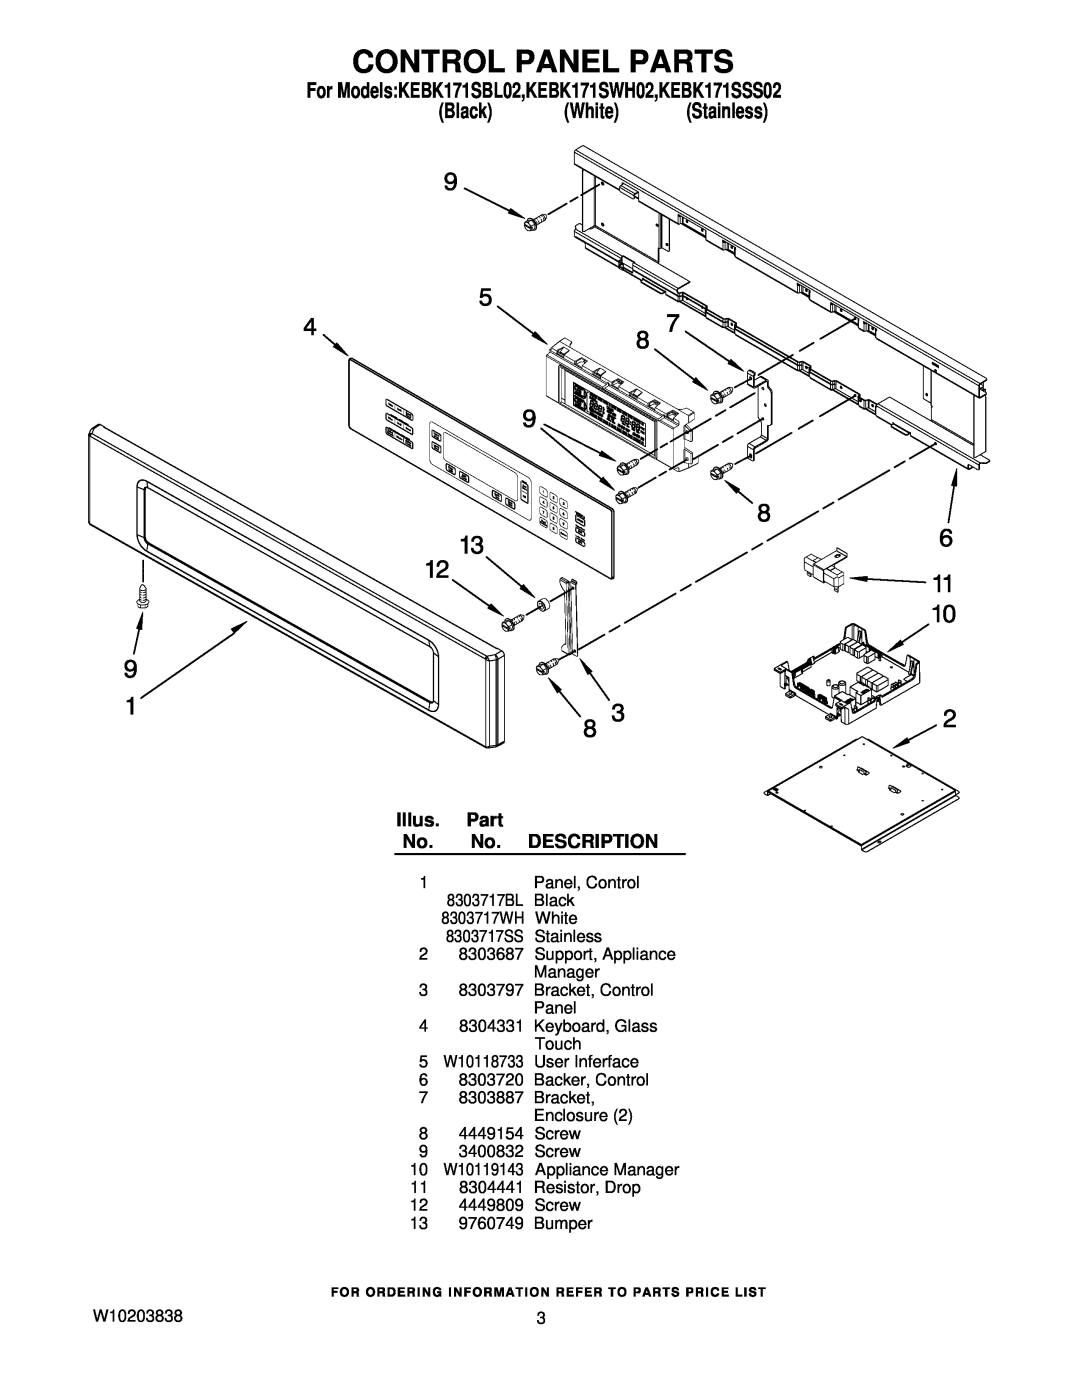 KitchenAid manual Control Panel Parts, Illus, Description, For ModelsKEBK171SBL02,KEBK171SWH02,KEBK171SSS02 